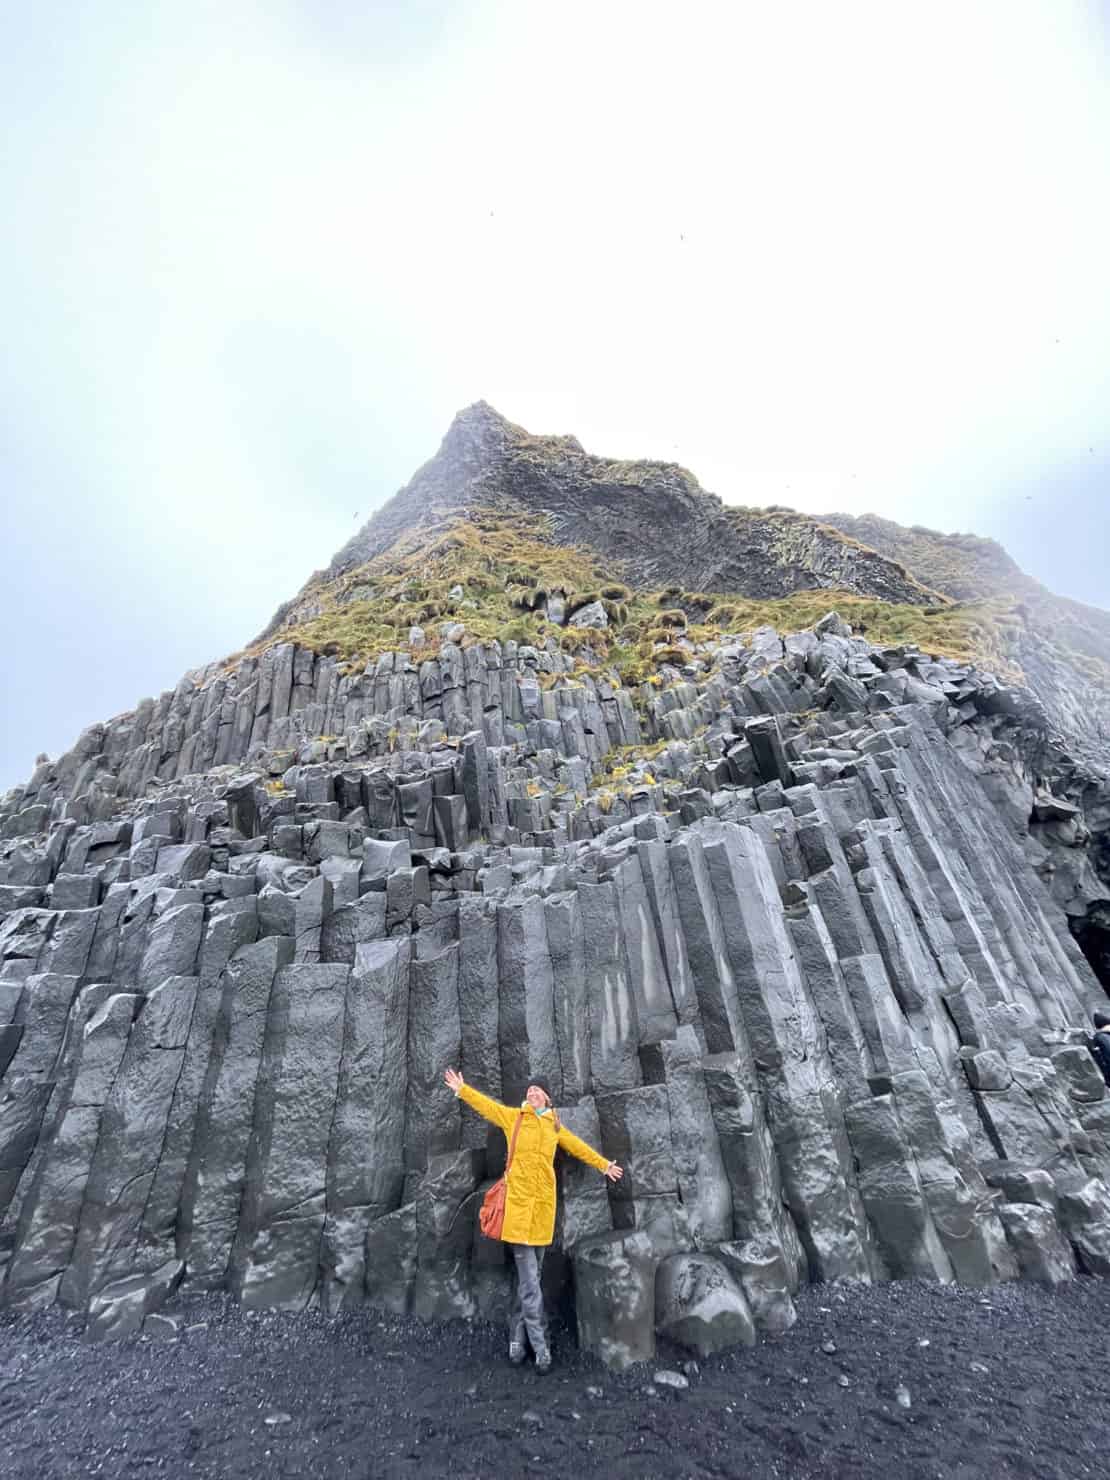 Iceland - Reynisfjara beach - Abigail King against stone black columns